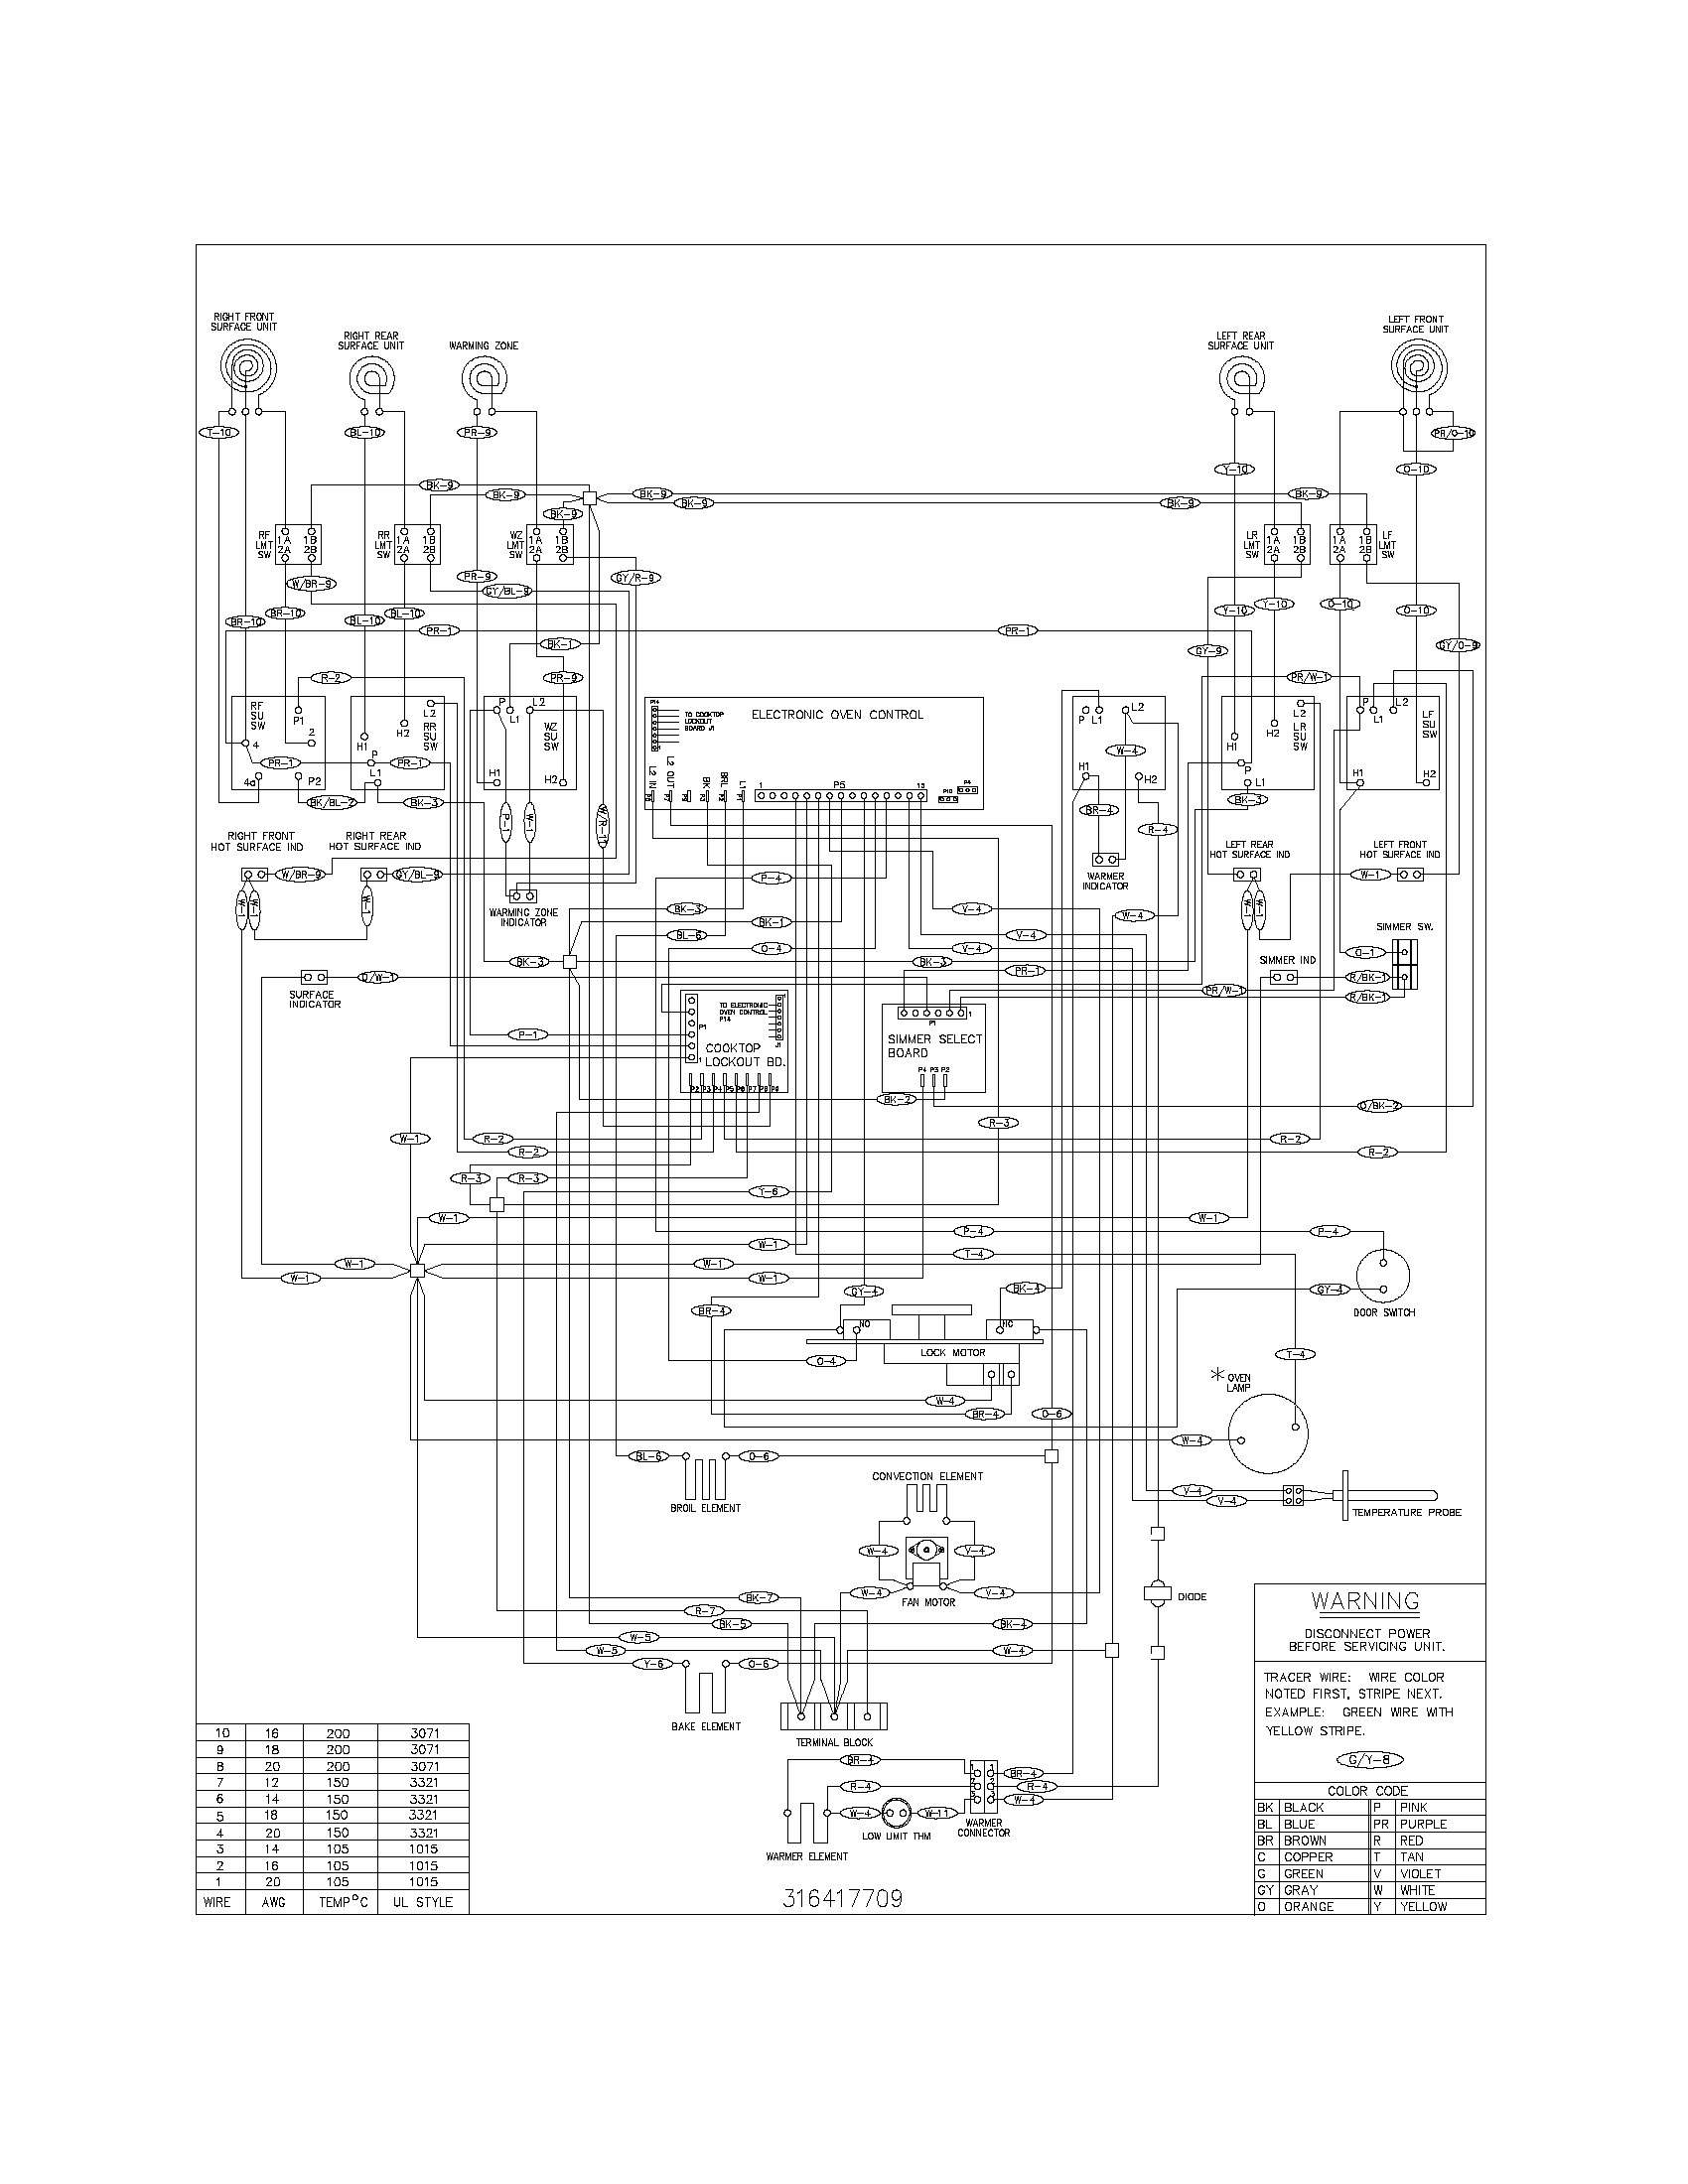 Kenmore Dryer Wiring Diagram Wiring Diagram for Kenmore Dryer Best Cool Kenmore 665 Wiring Schematic